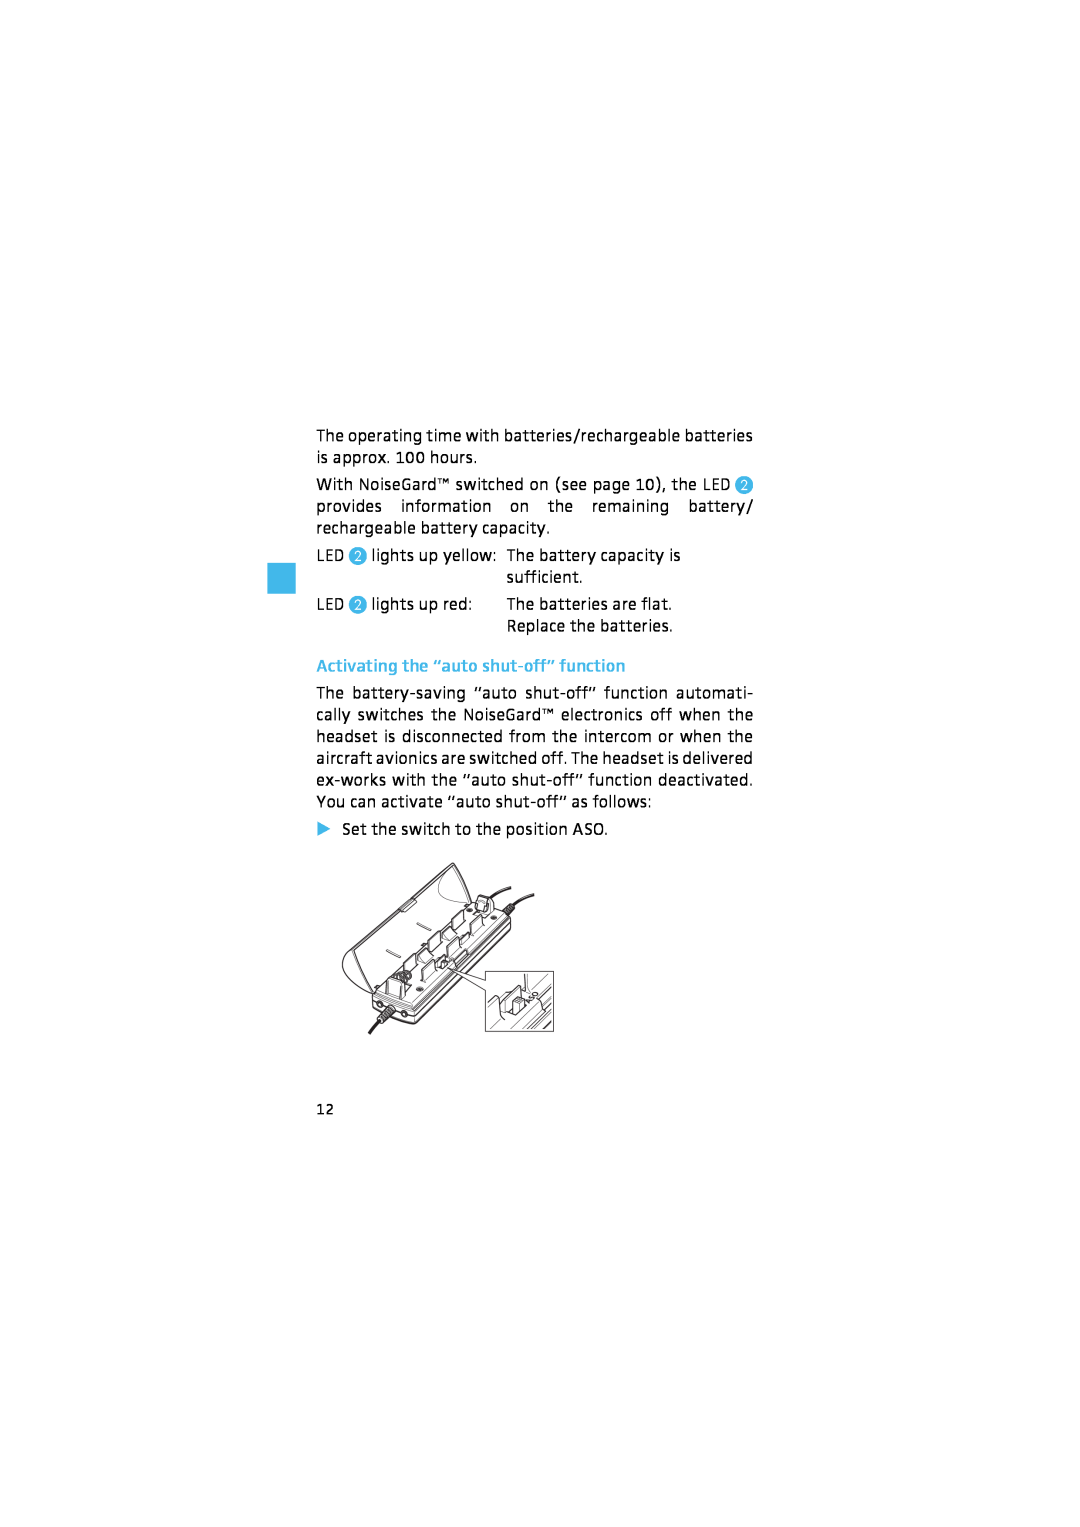 Sennheiser HMEC 46 manual Activating the “auto shut-off”function, sufficient 